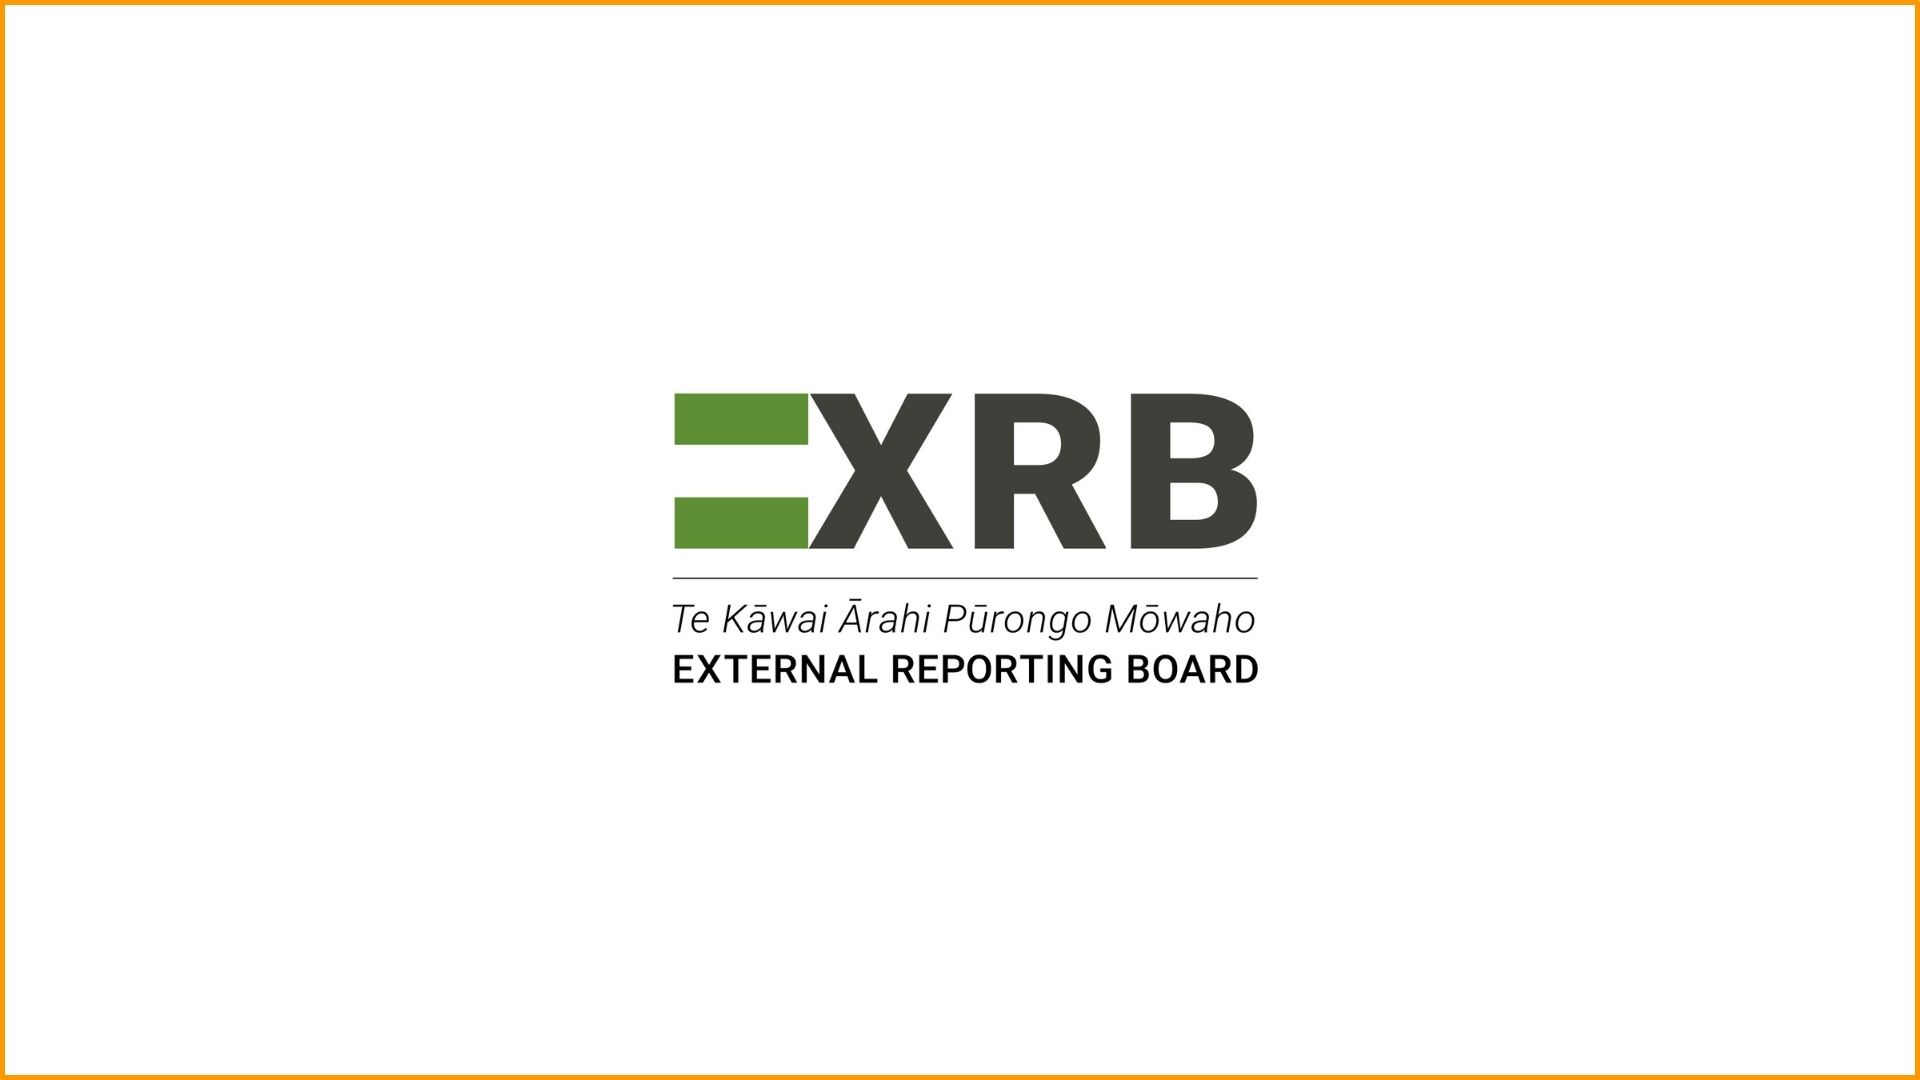 External Reporting Board